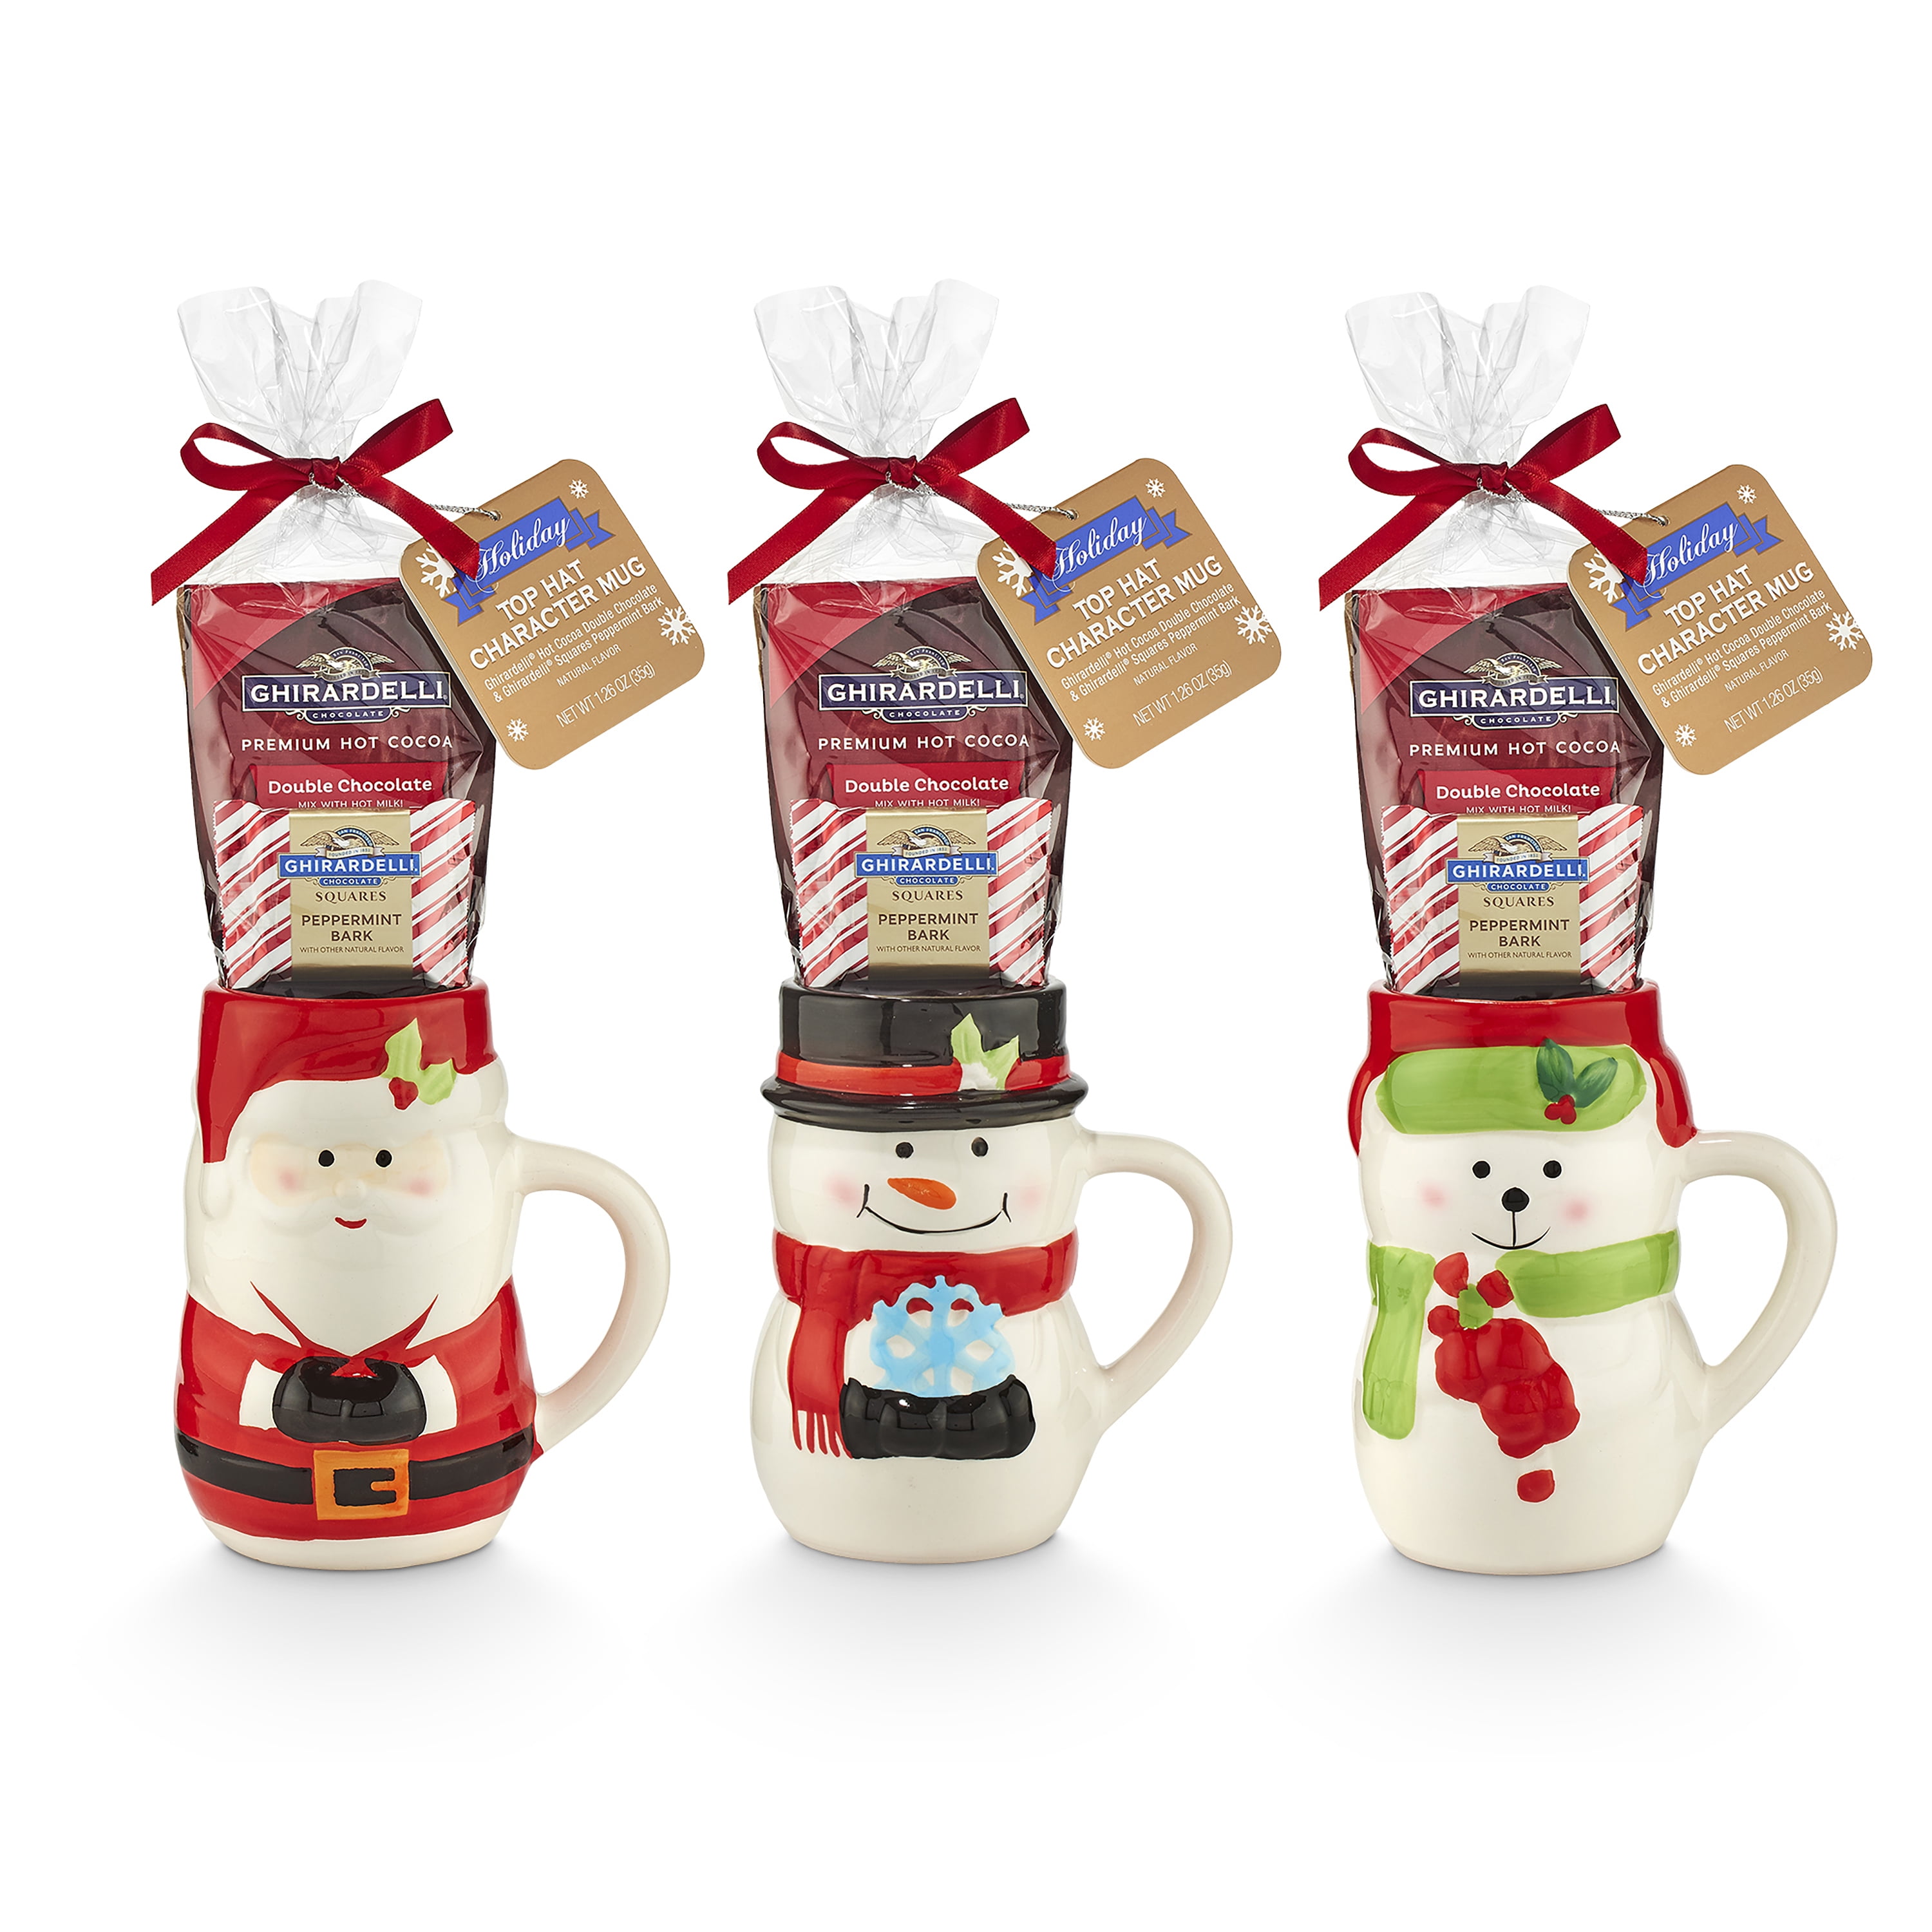 Ghirardelli Top Hat Character Mug & Hot Cocoa Gift Set, 1.26oz